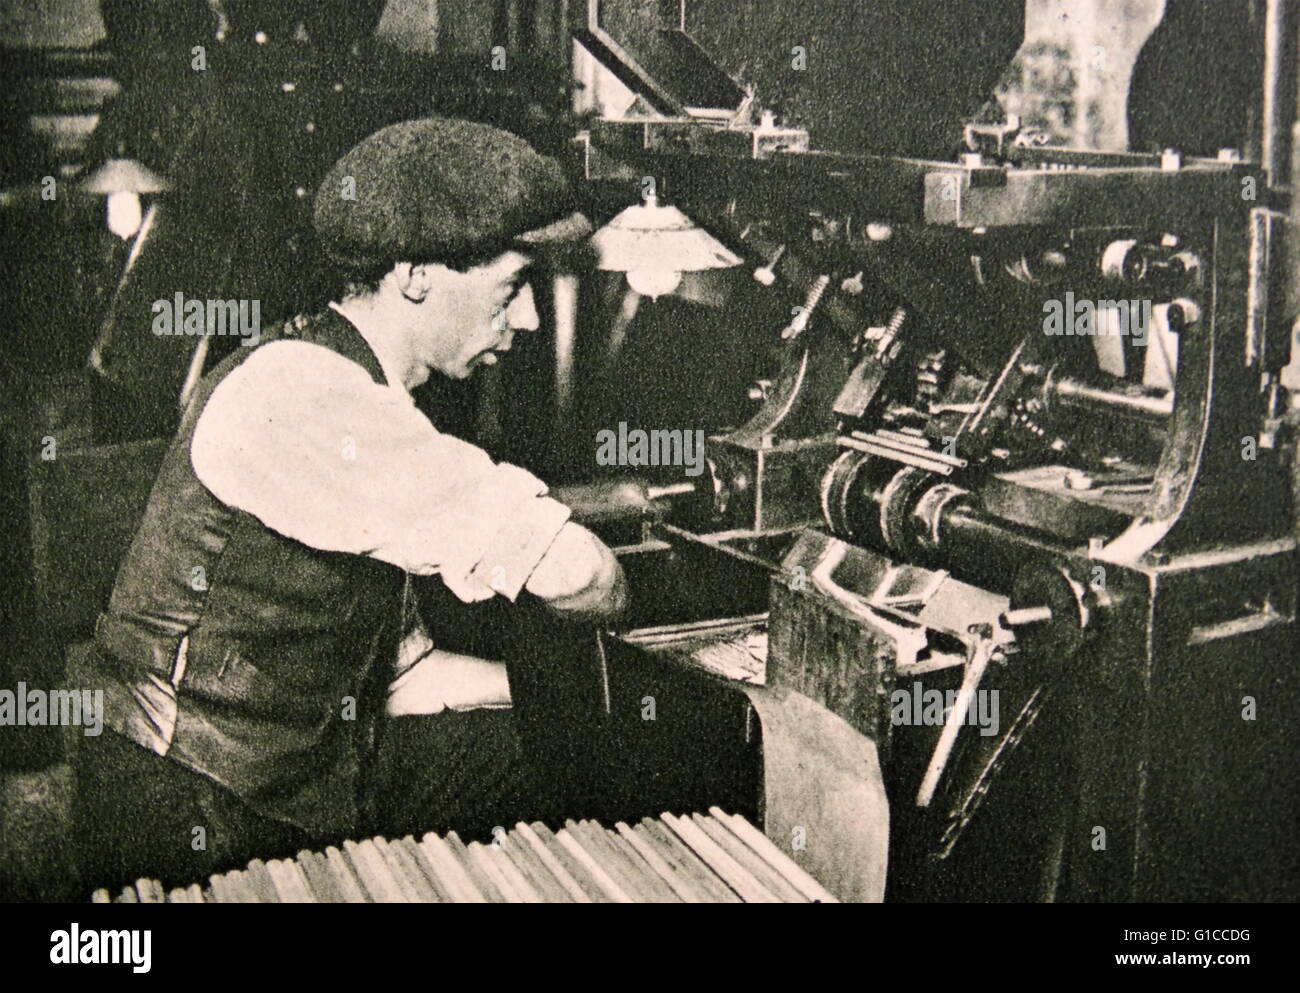 Macchina maschio operatore in una fabbrica a matita circa 1925 Foto Stock